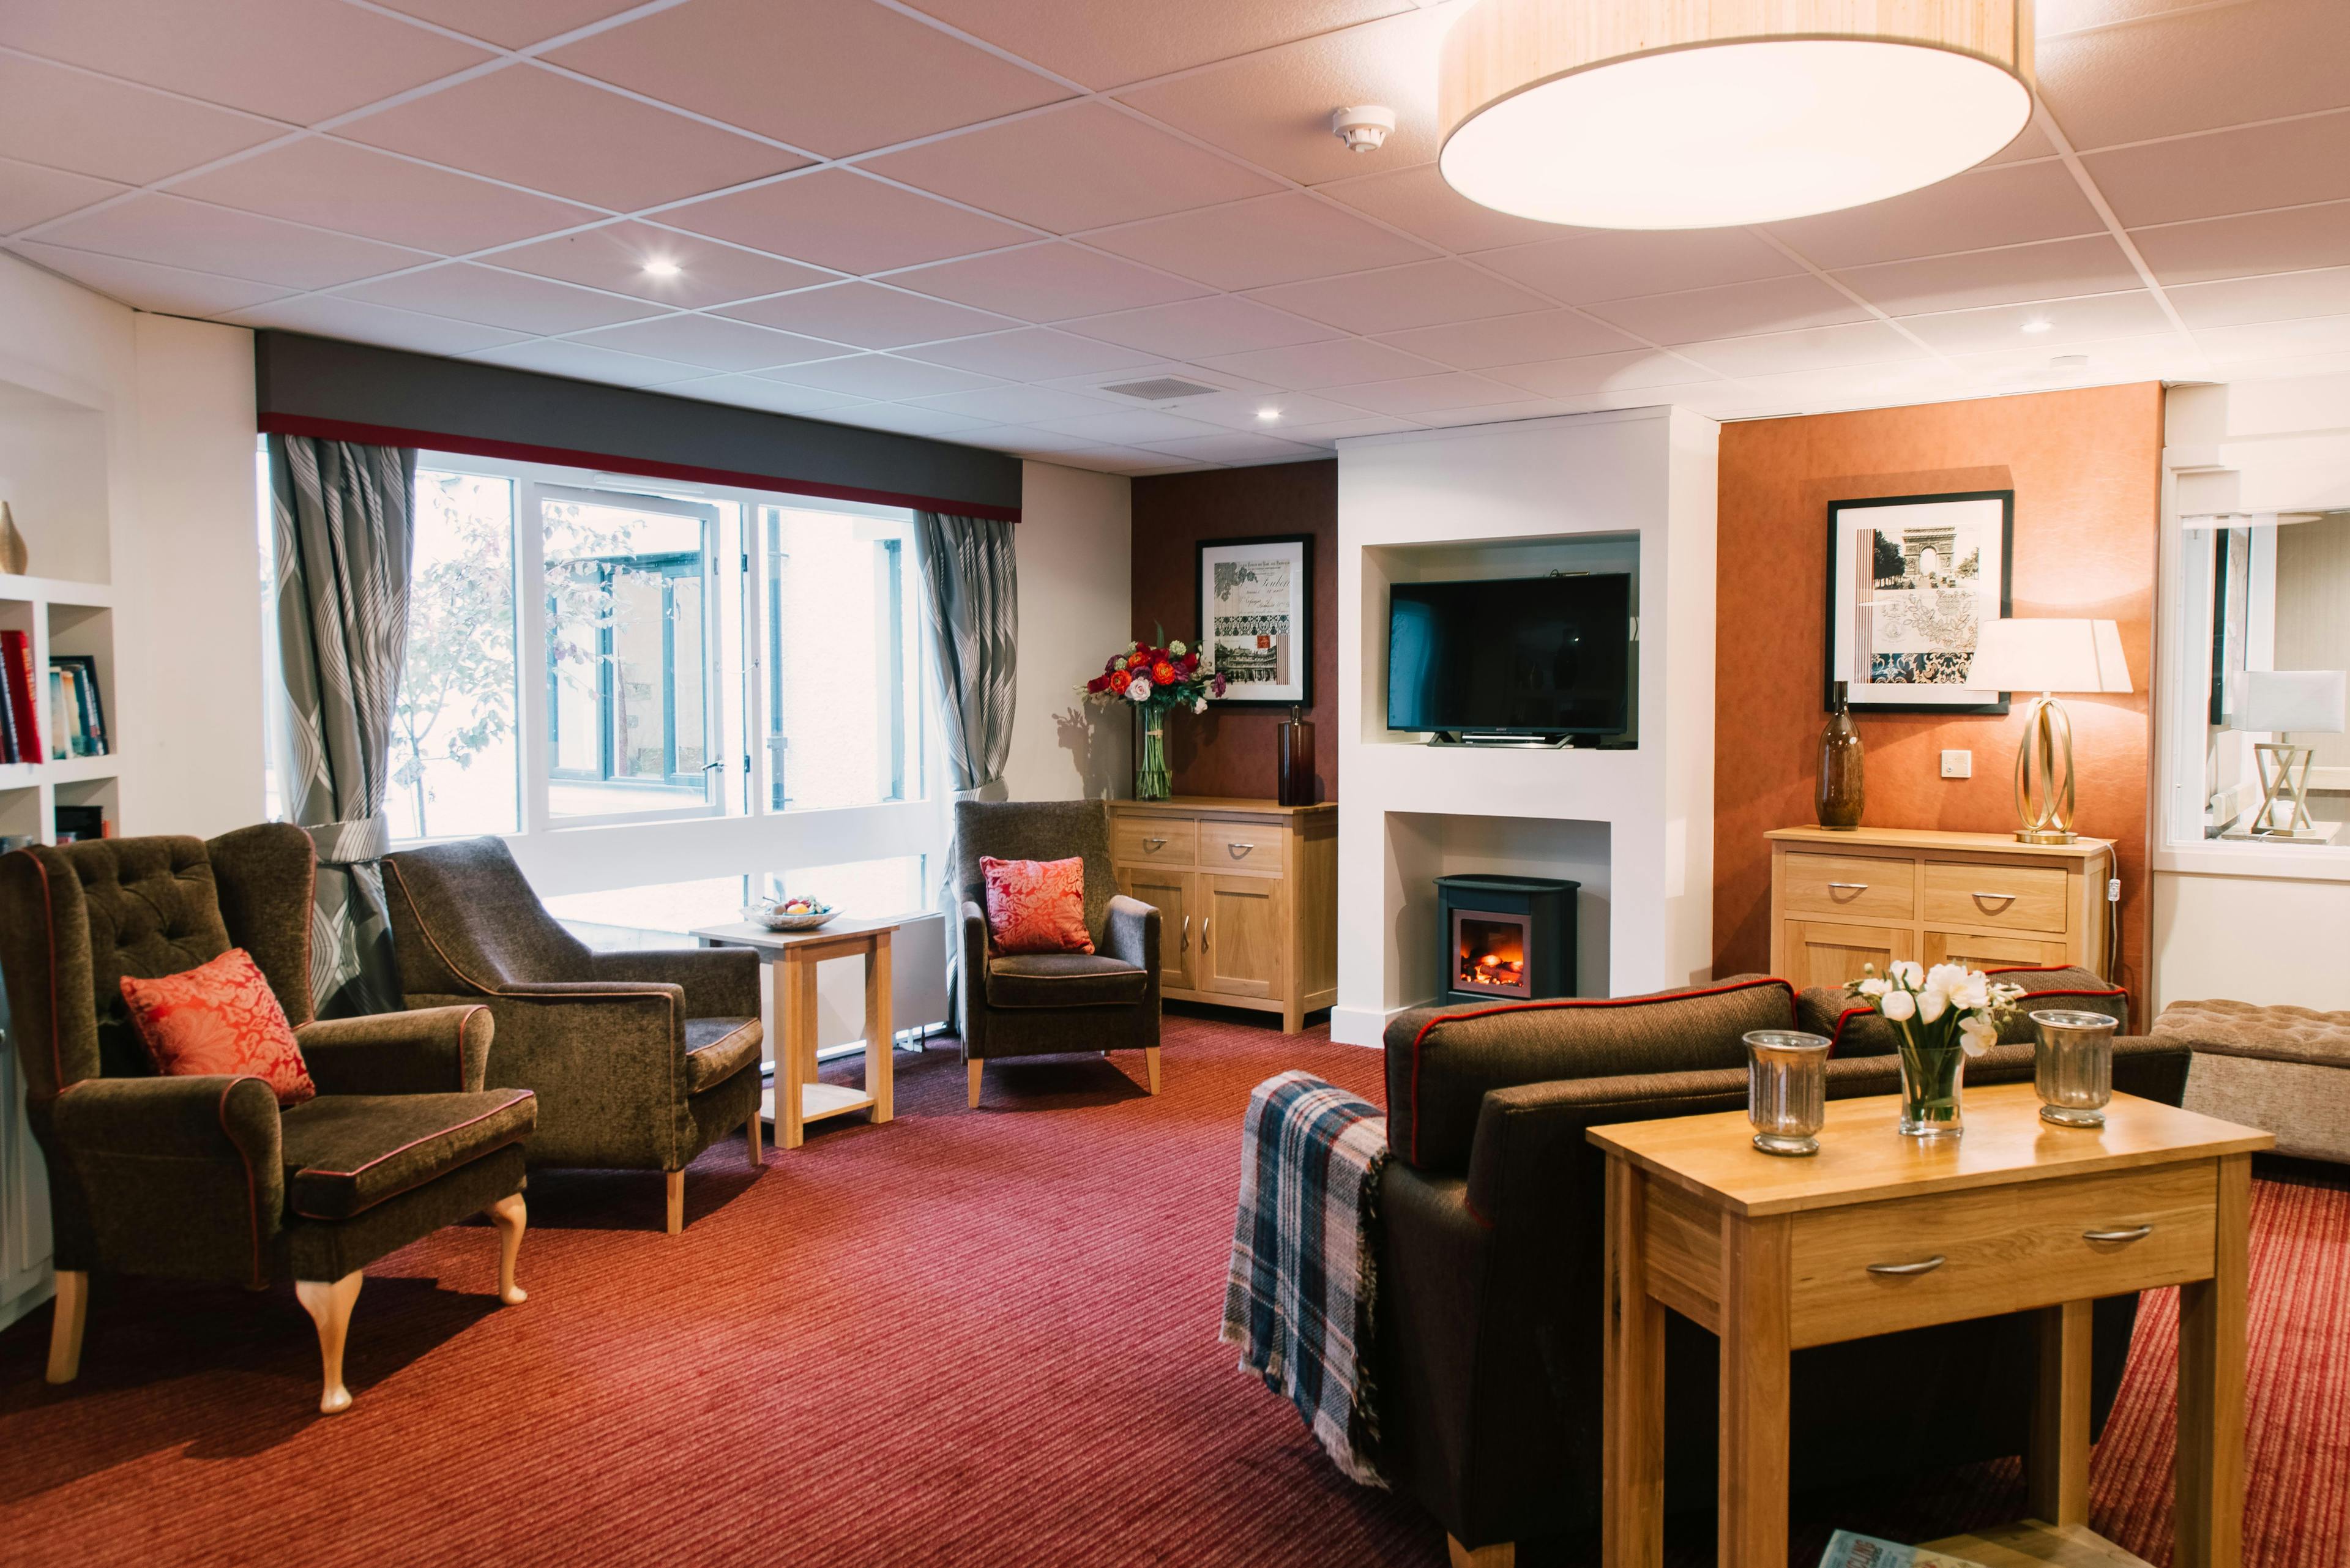 Communal Lounge at Strachan House Care Home in Edinburgh, Scotland